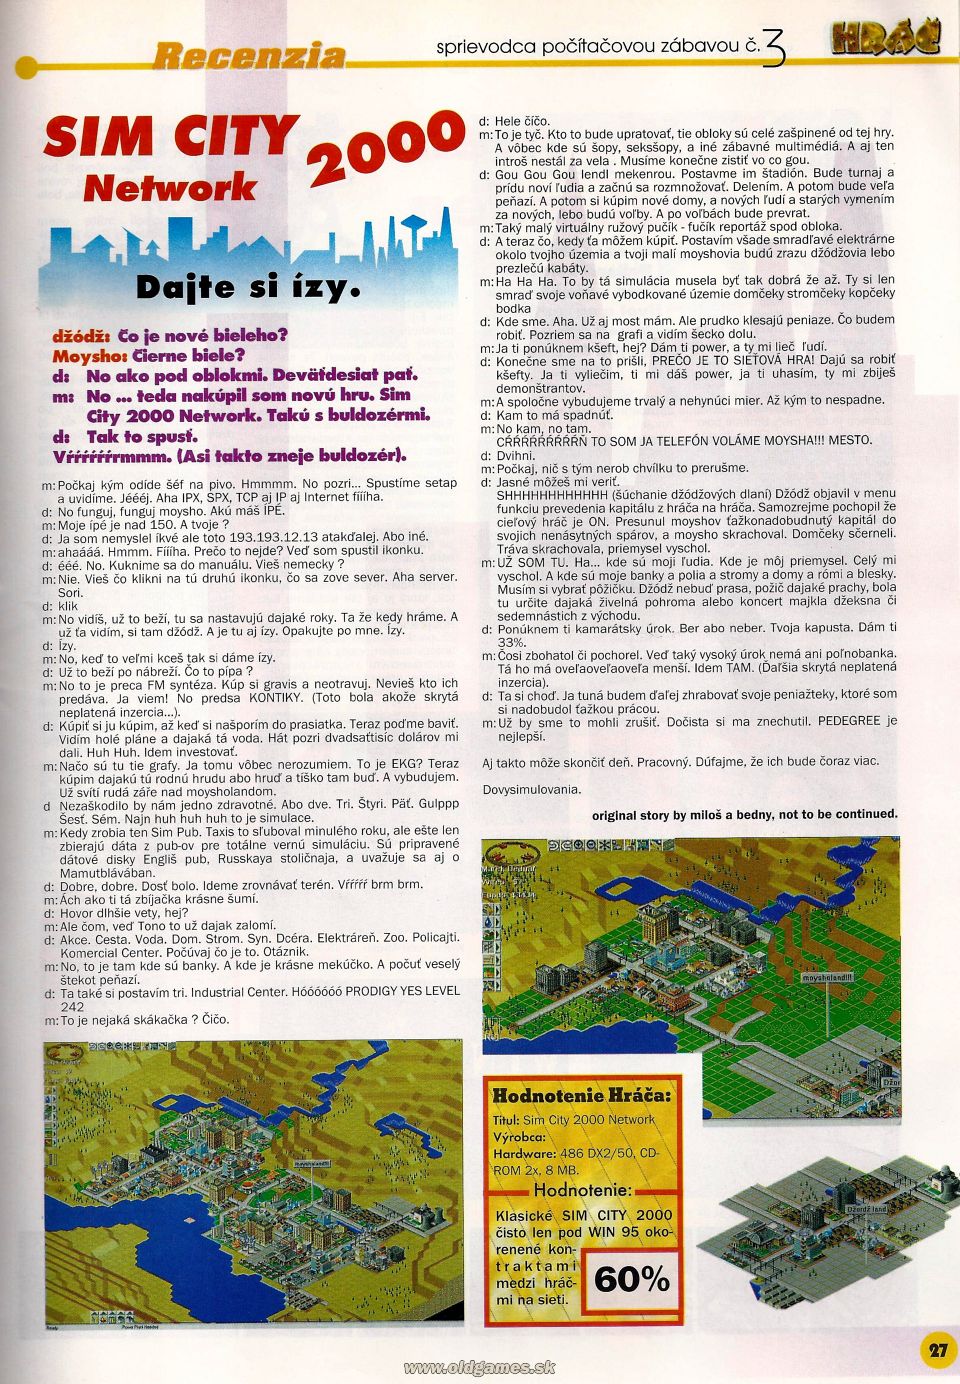 Sim City 2000 Network